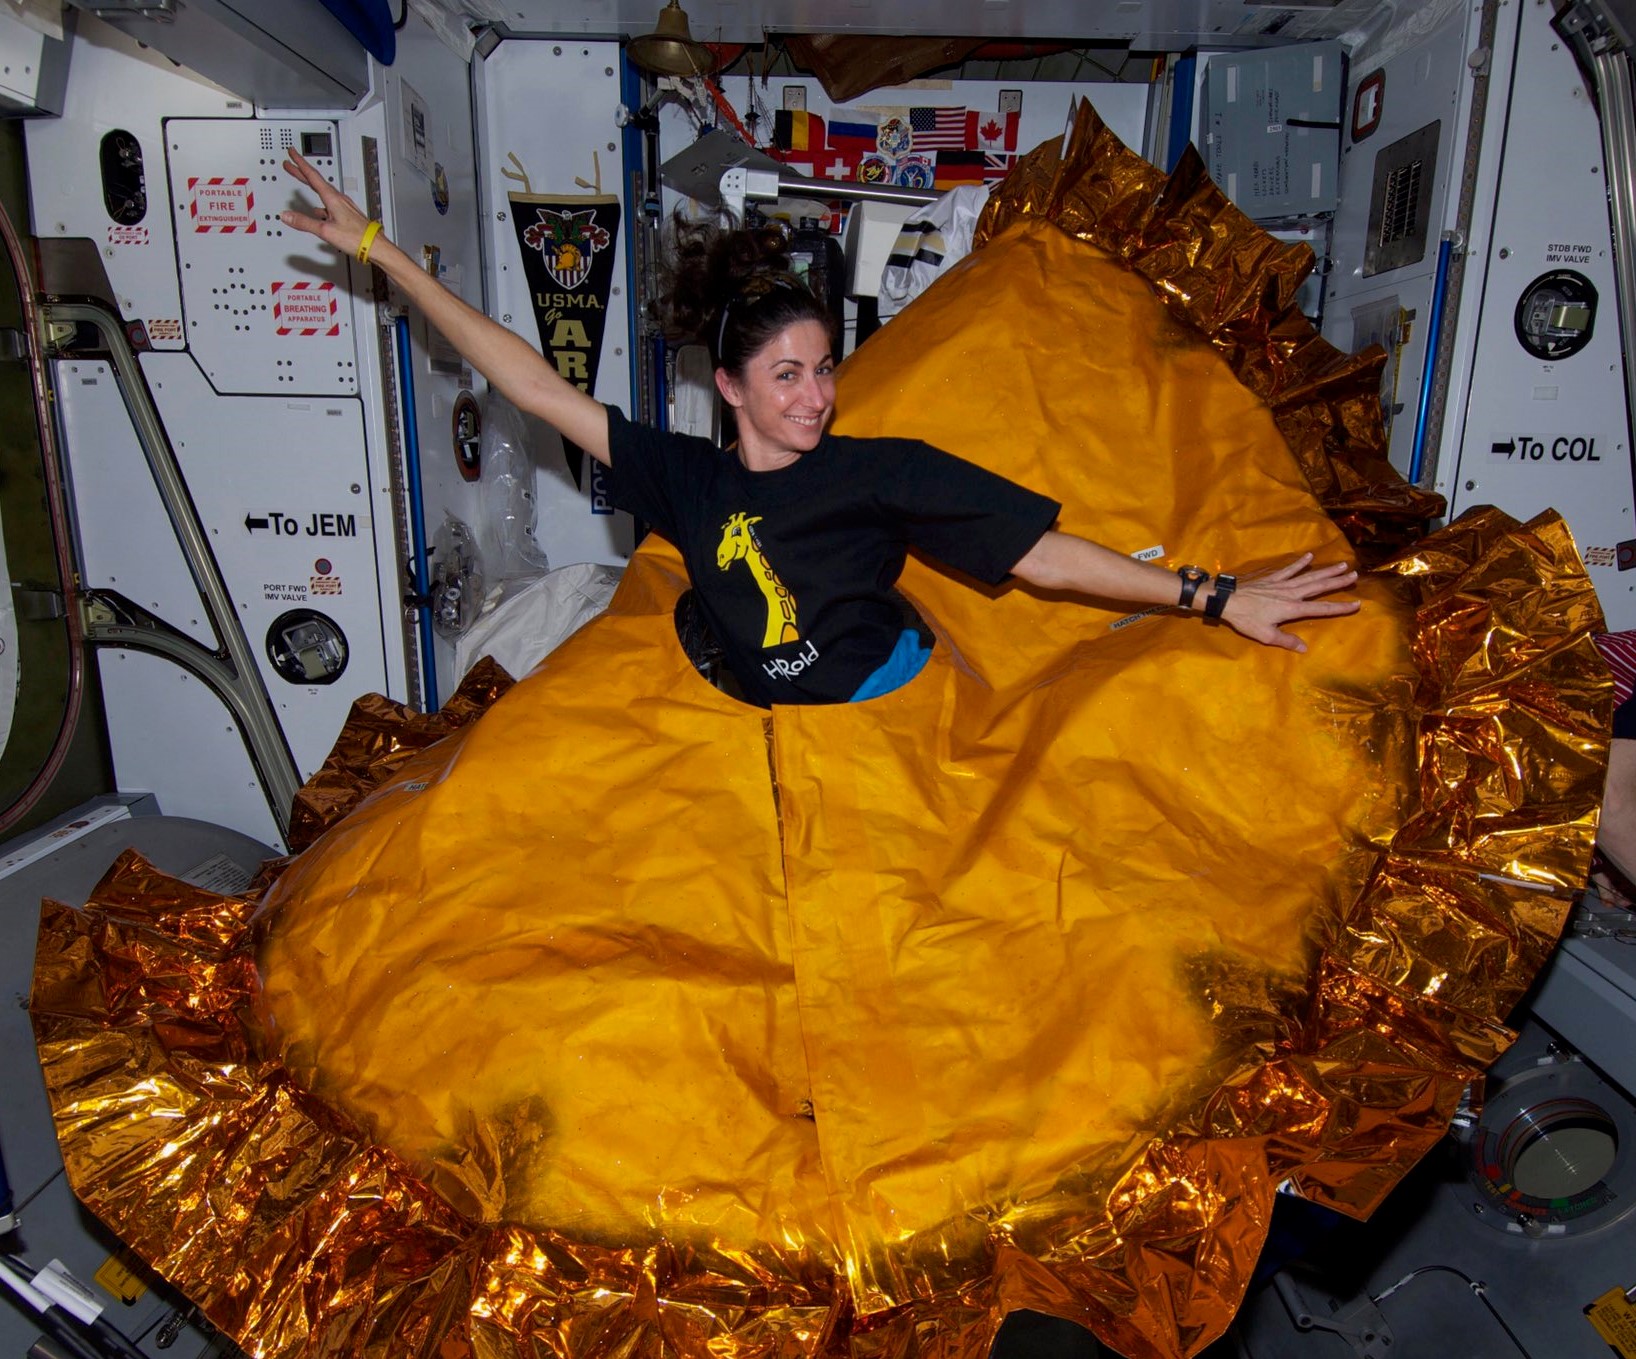 Expedition 21 Flight Engineer NASA astronaut Nicole P. Stott shows off her Halloween costume